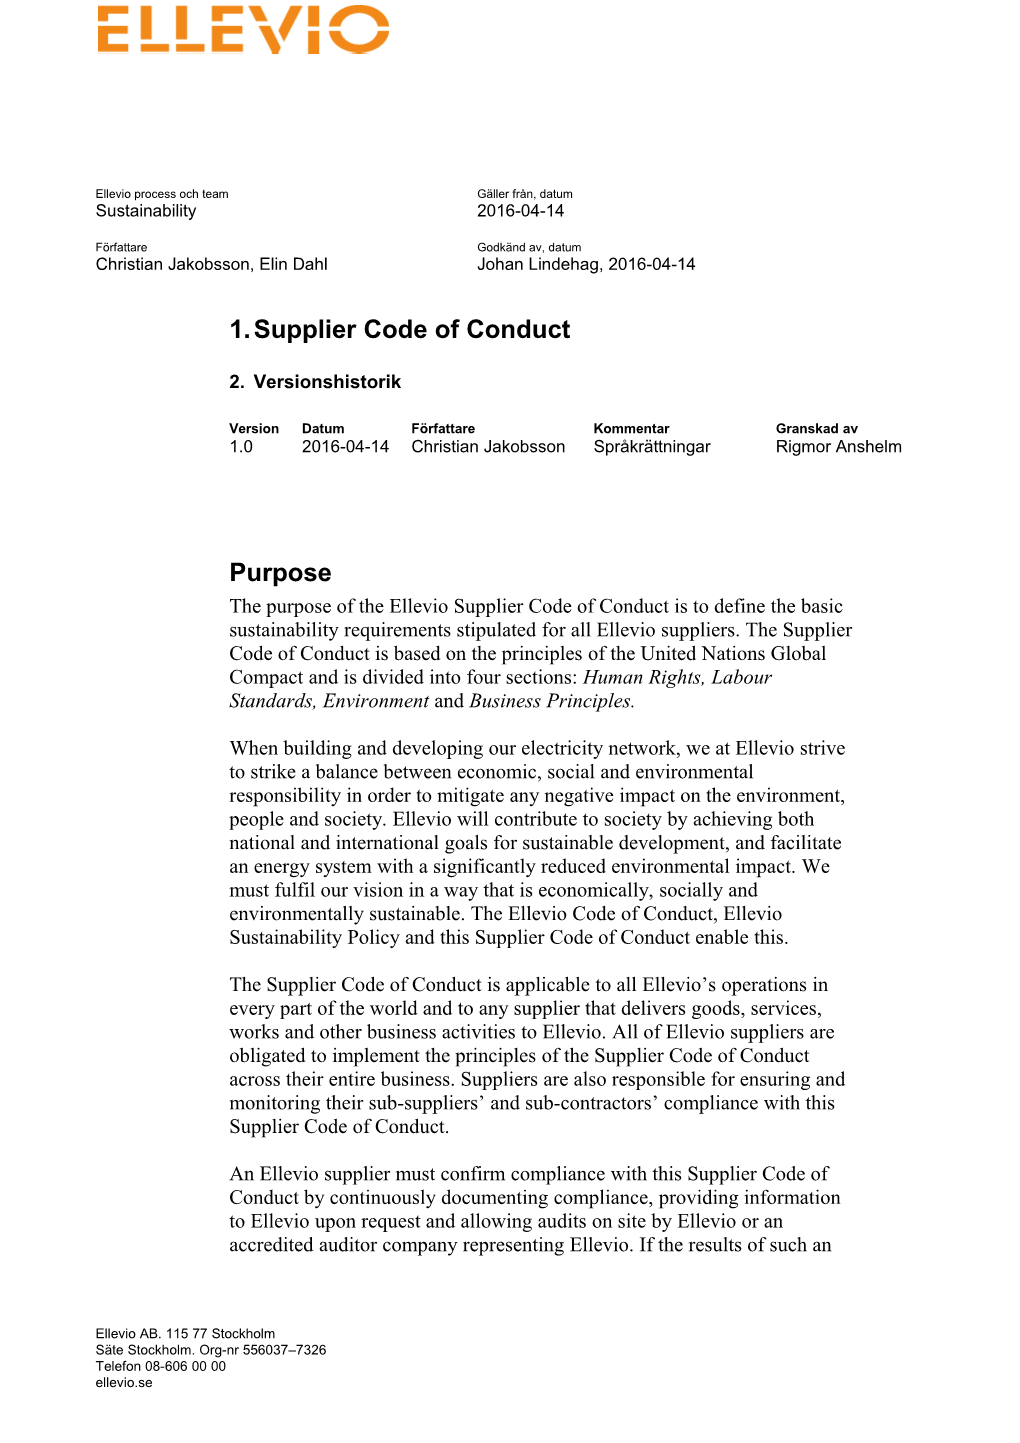 ENG Supplier Code of Conduct FINAL